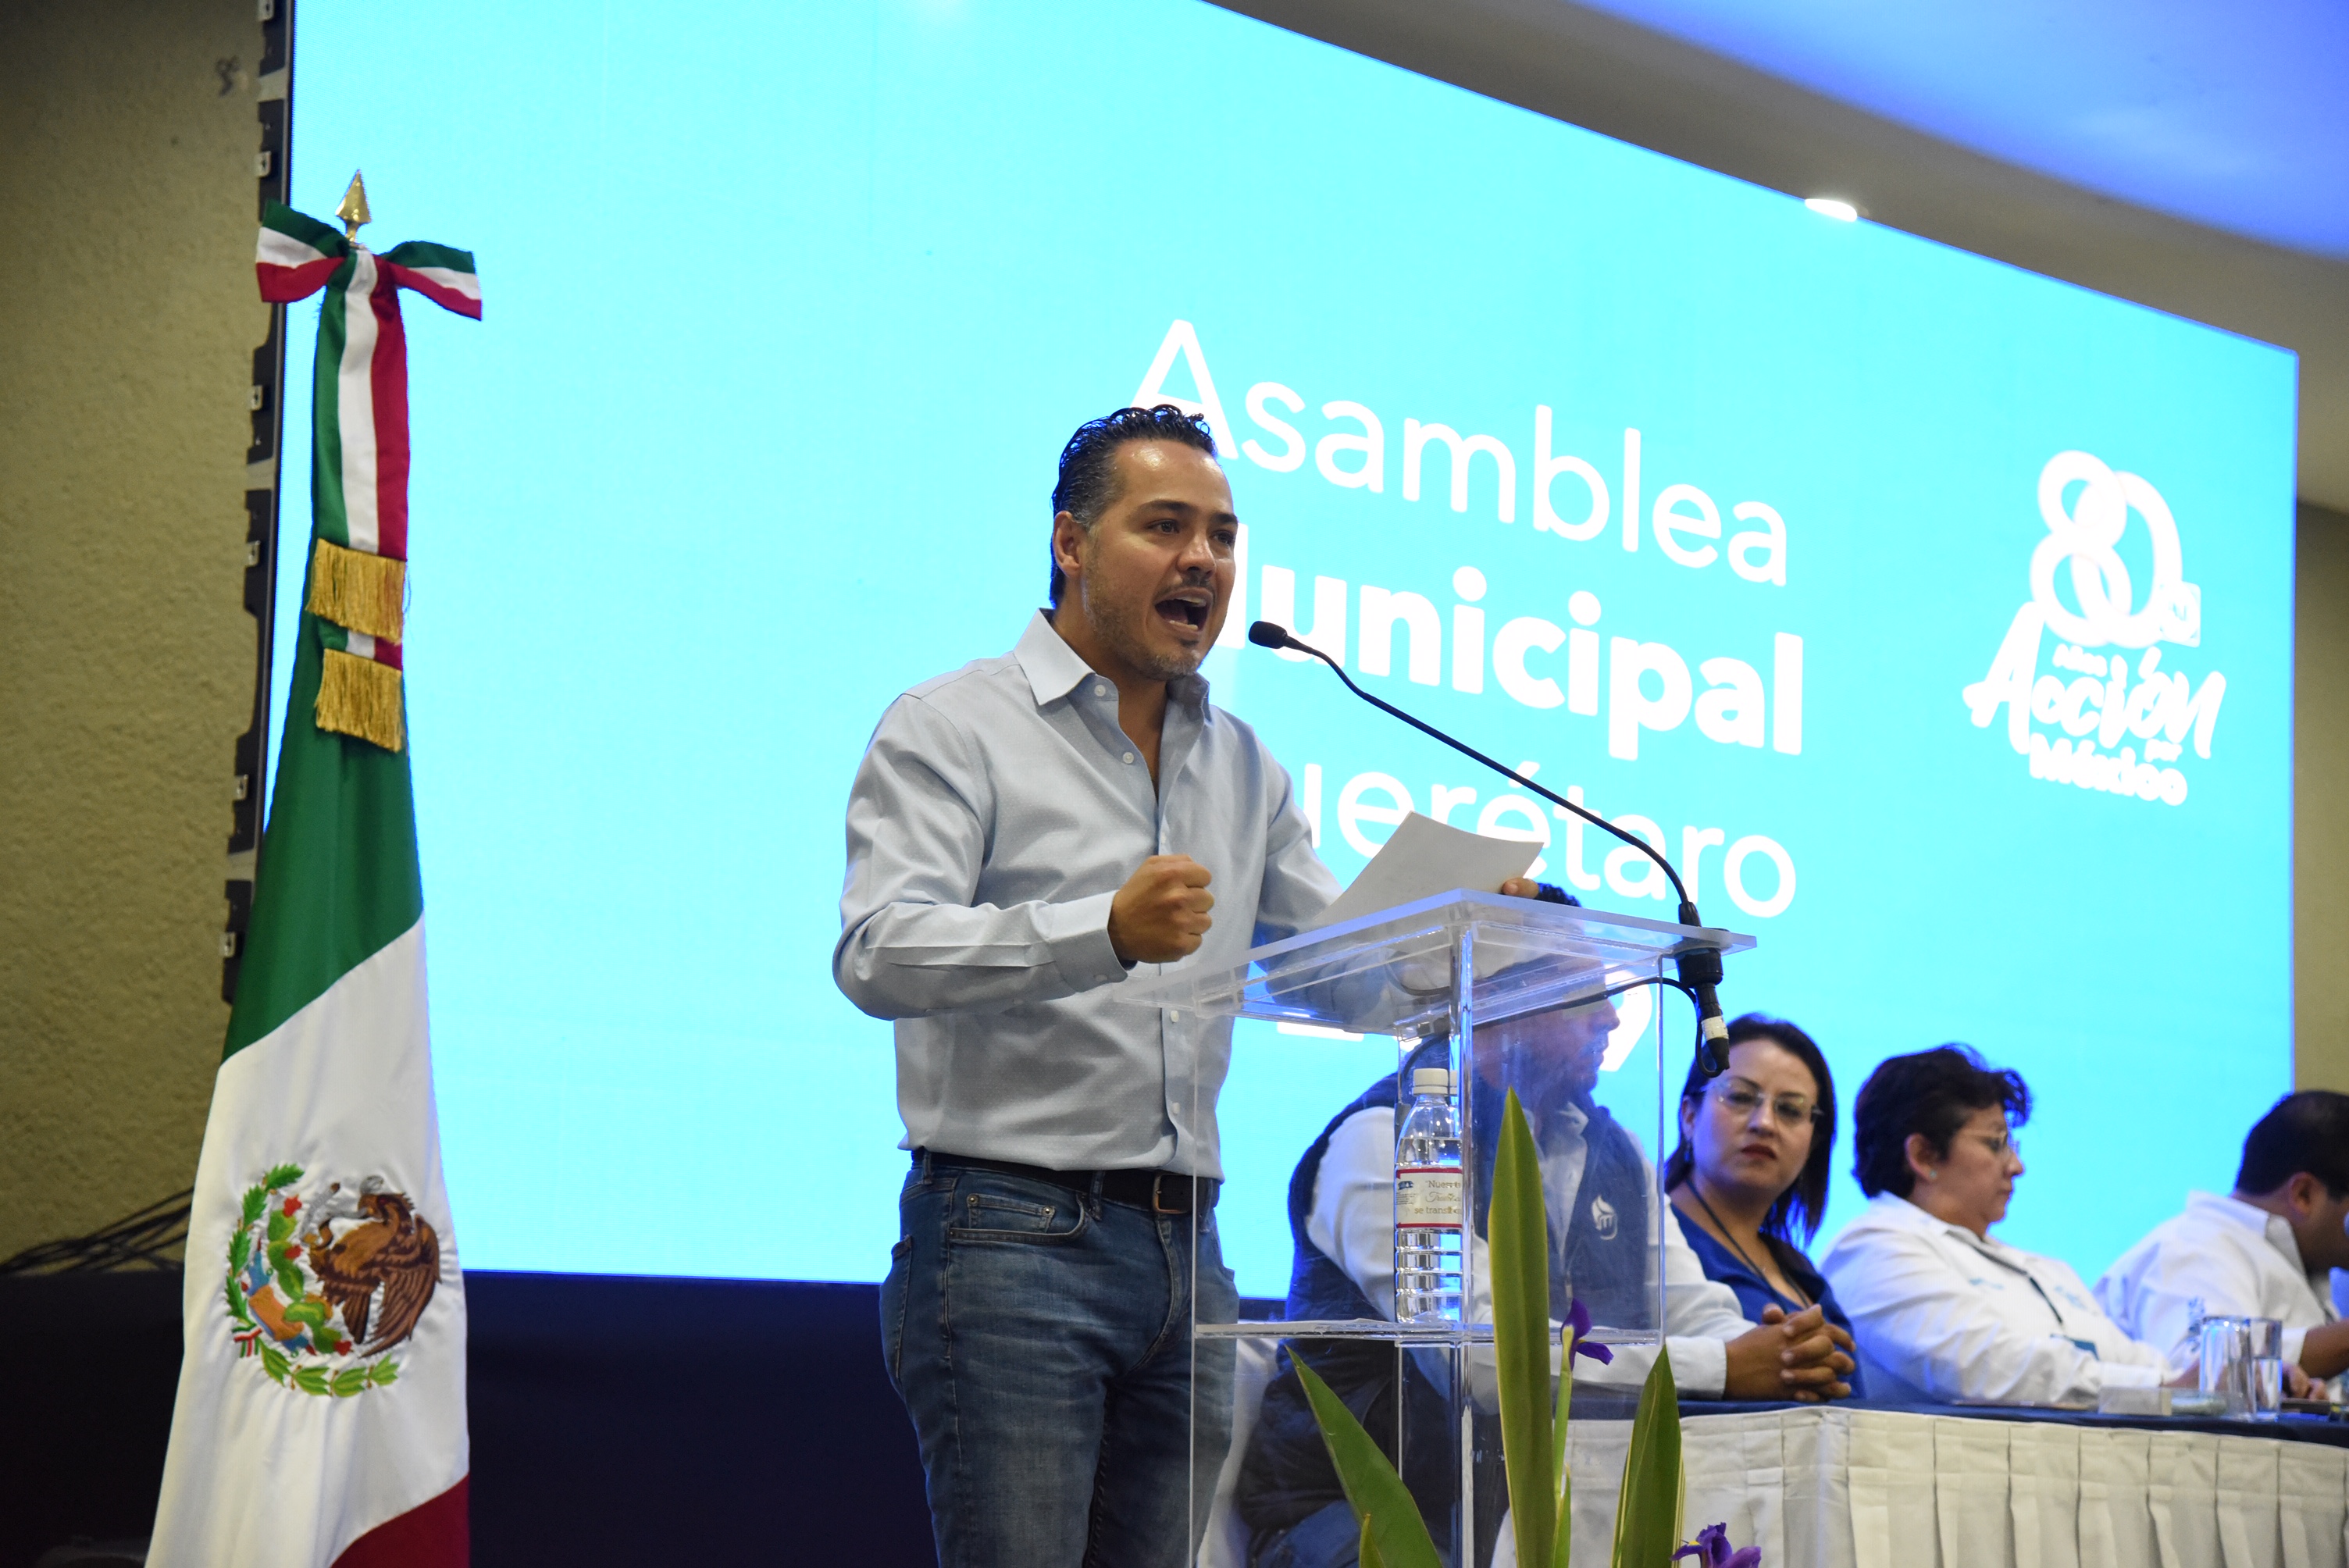  Encabezará Enrique Correa el Comité Directivo Municipal del PAN en Querétaro